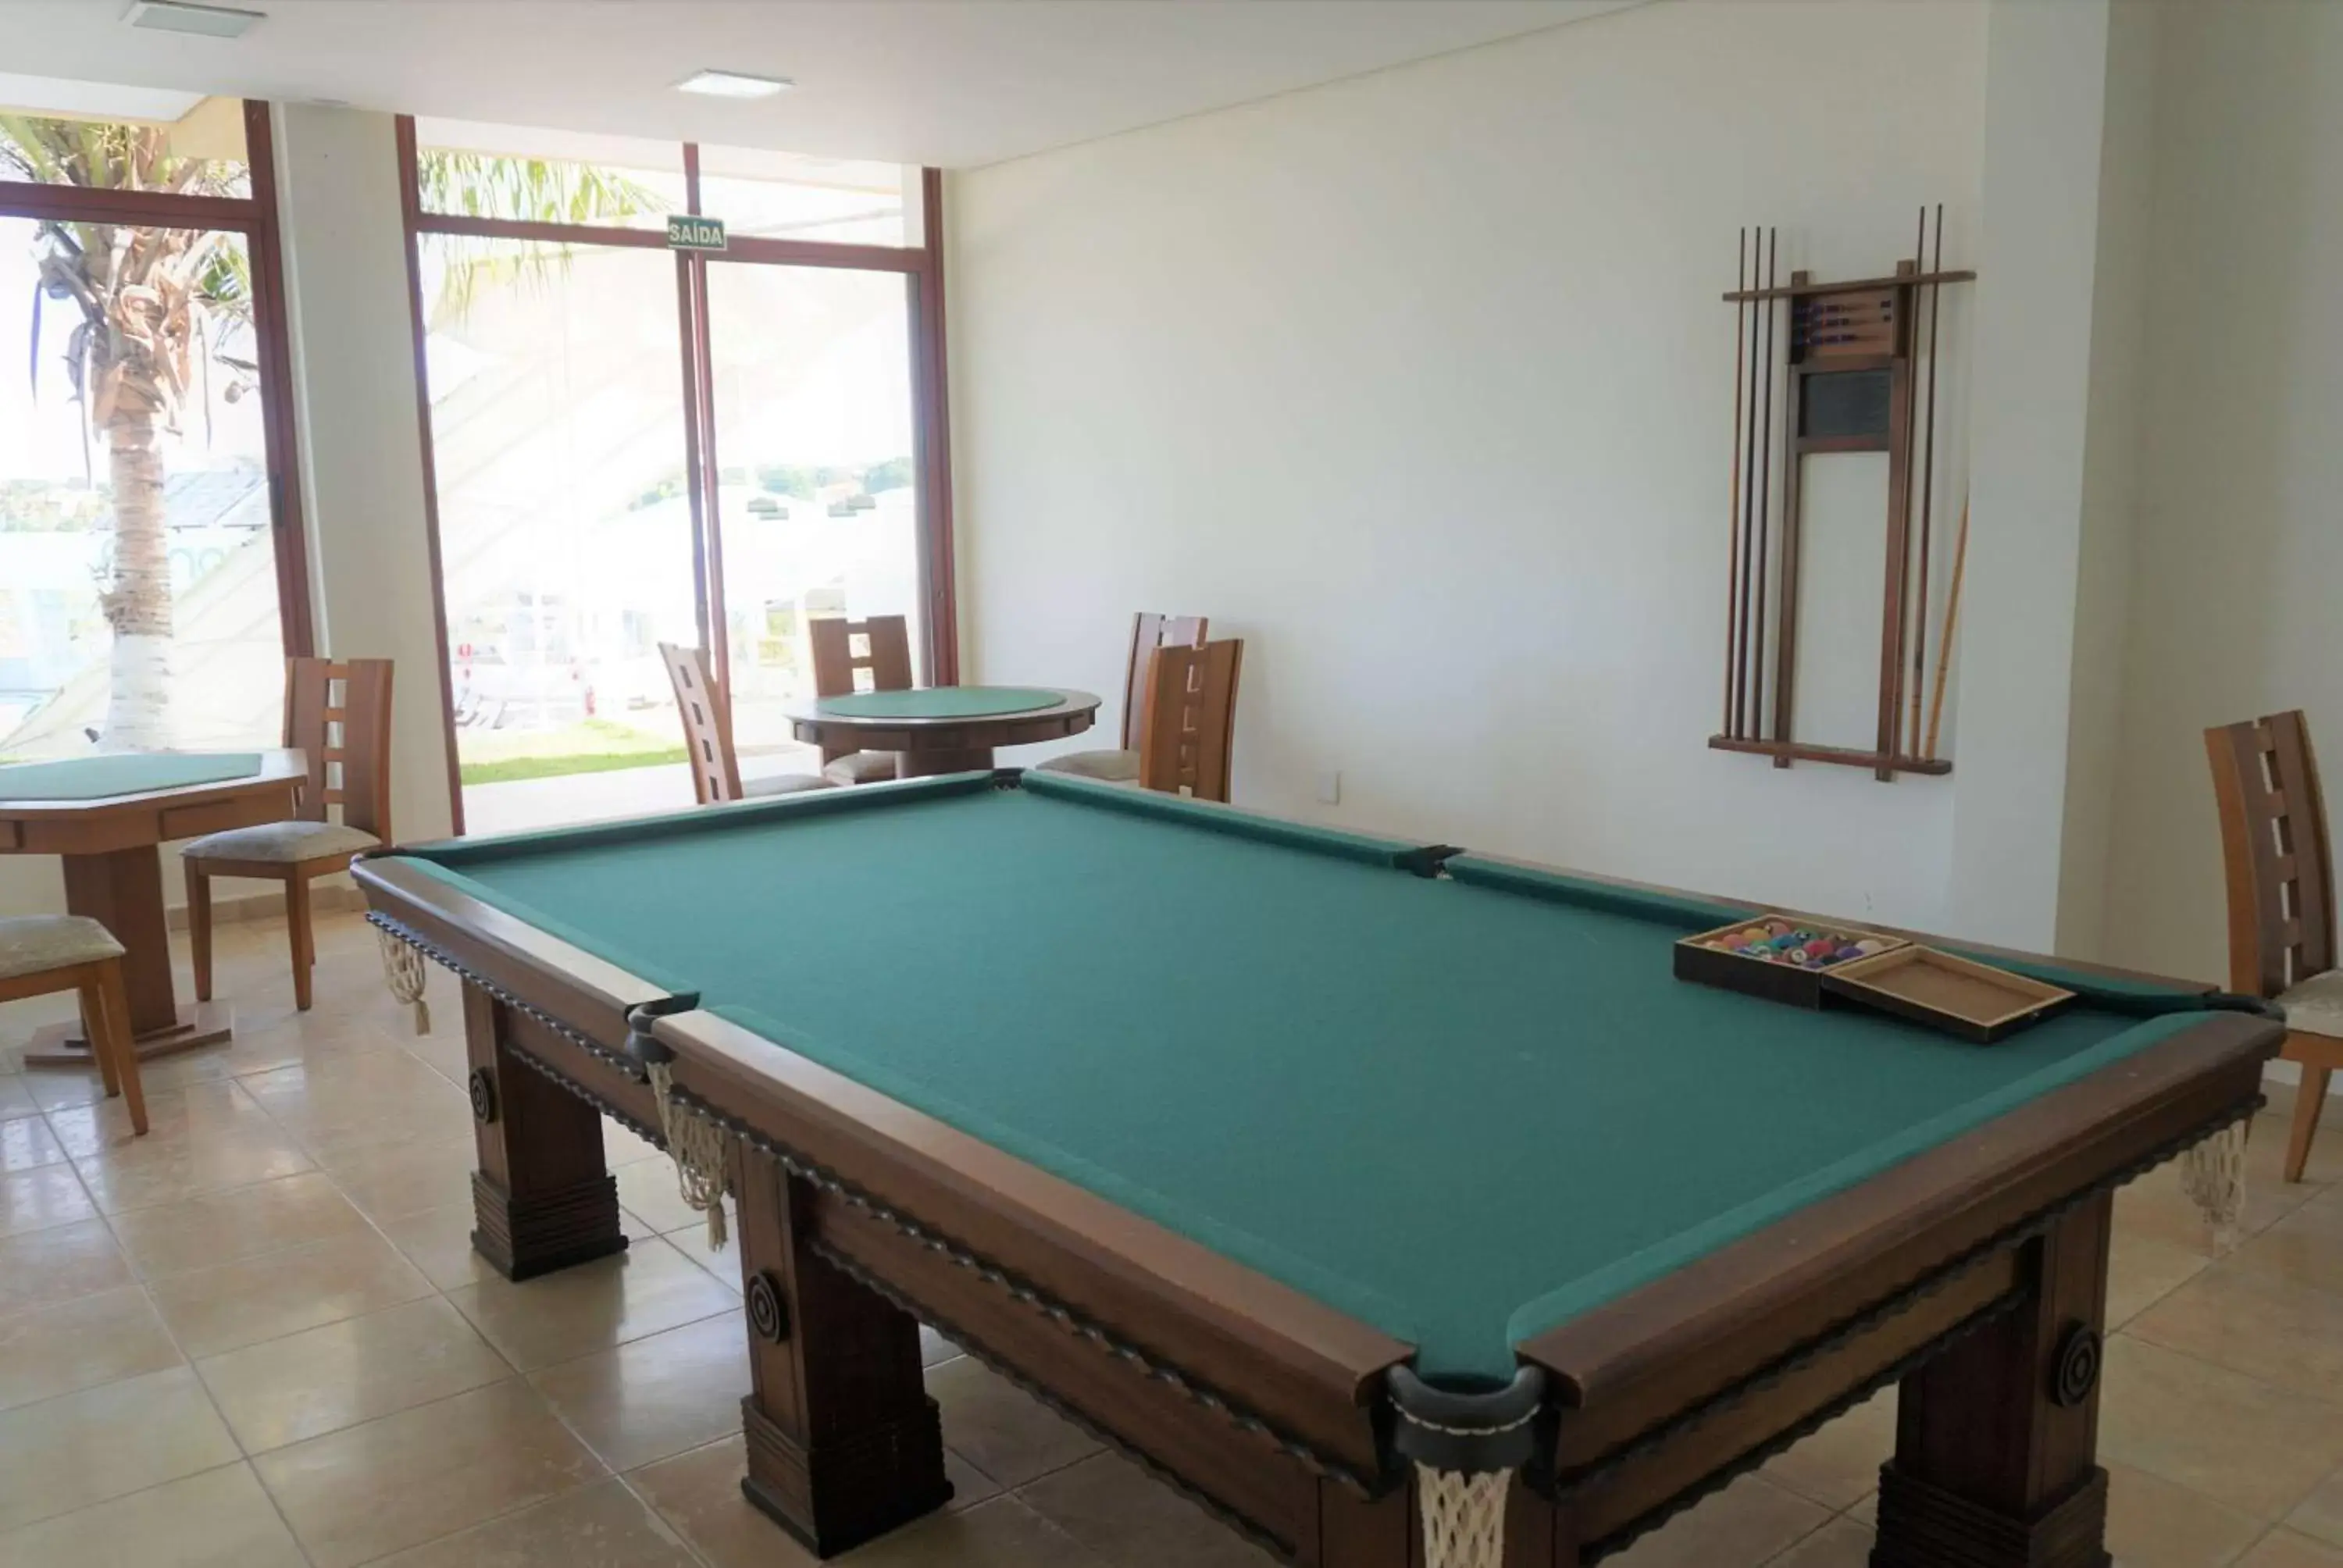 Game Room, Billiards in Ramada by Wyndham Furnaspark